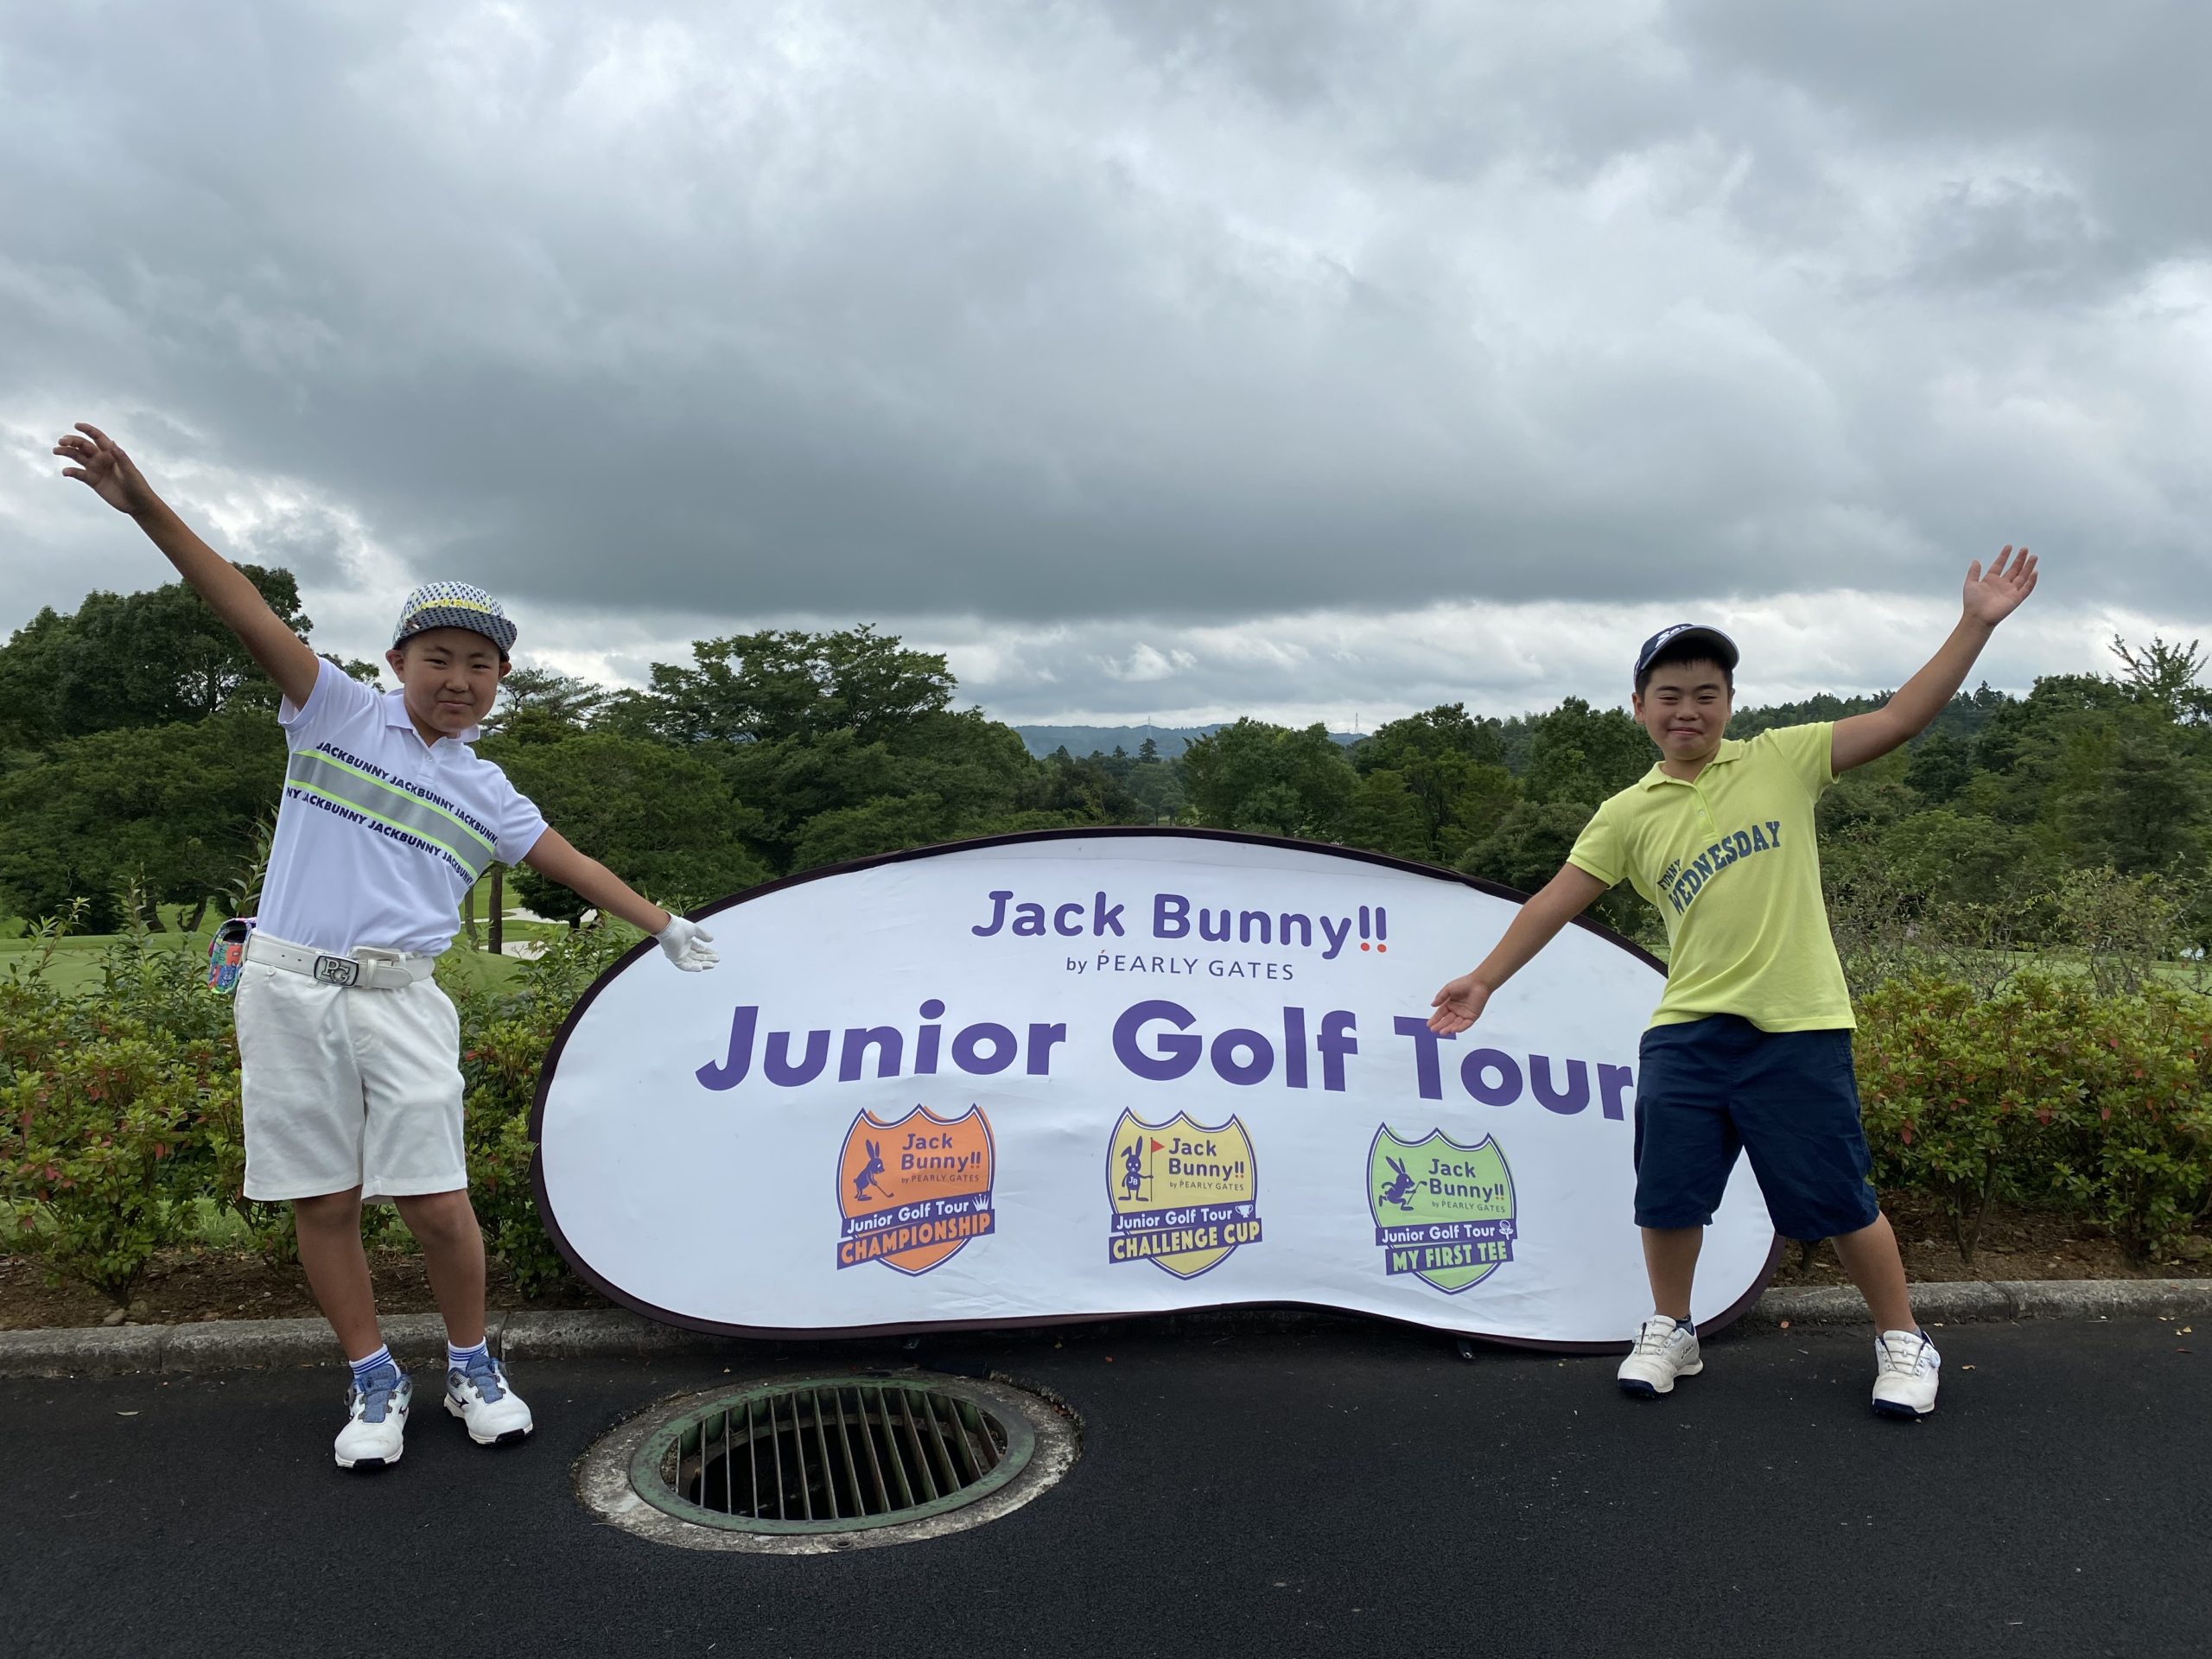 Jack Bunny!! Junior Golf Tour 2021 Challenge Cup